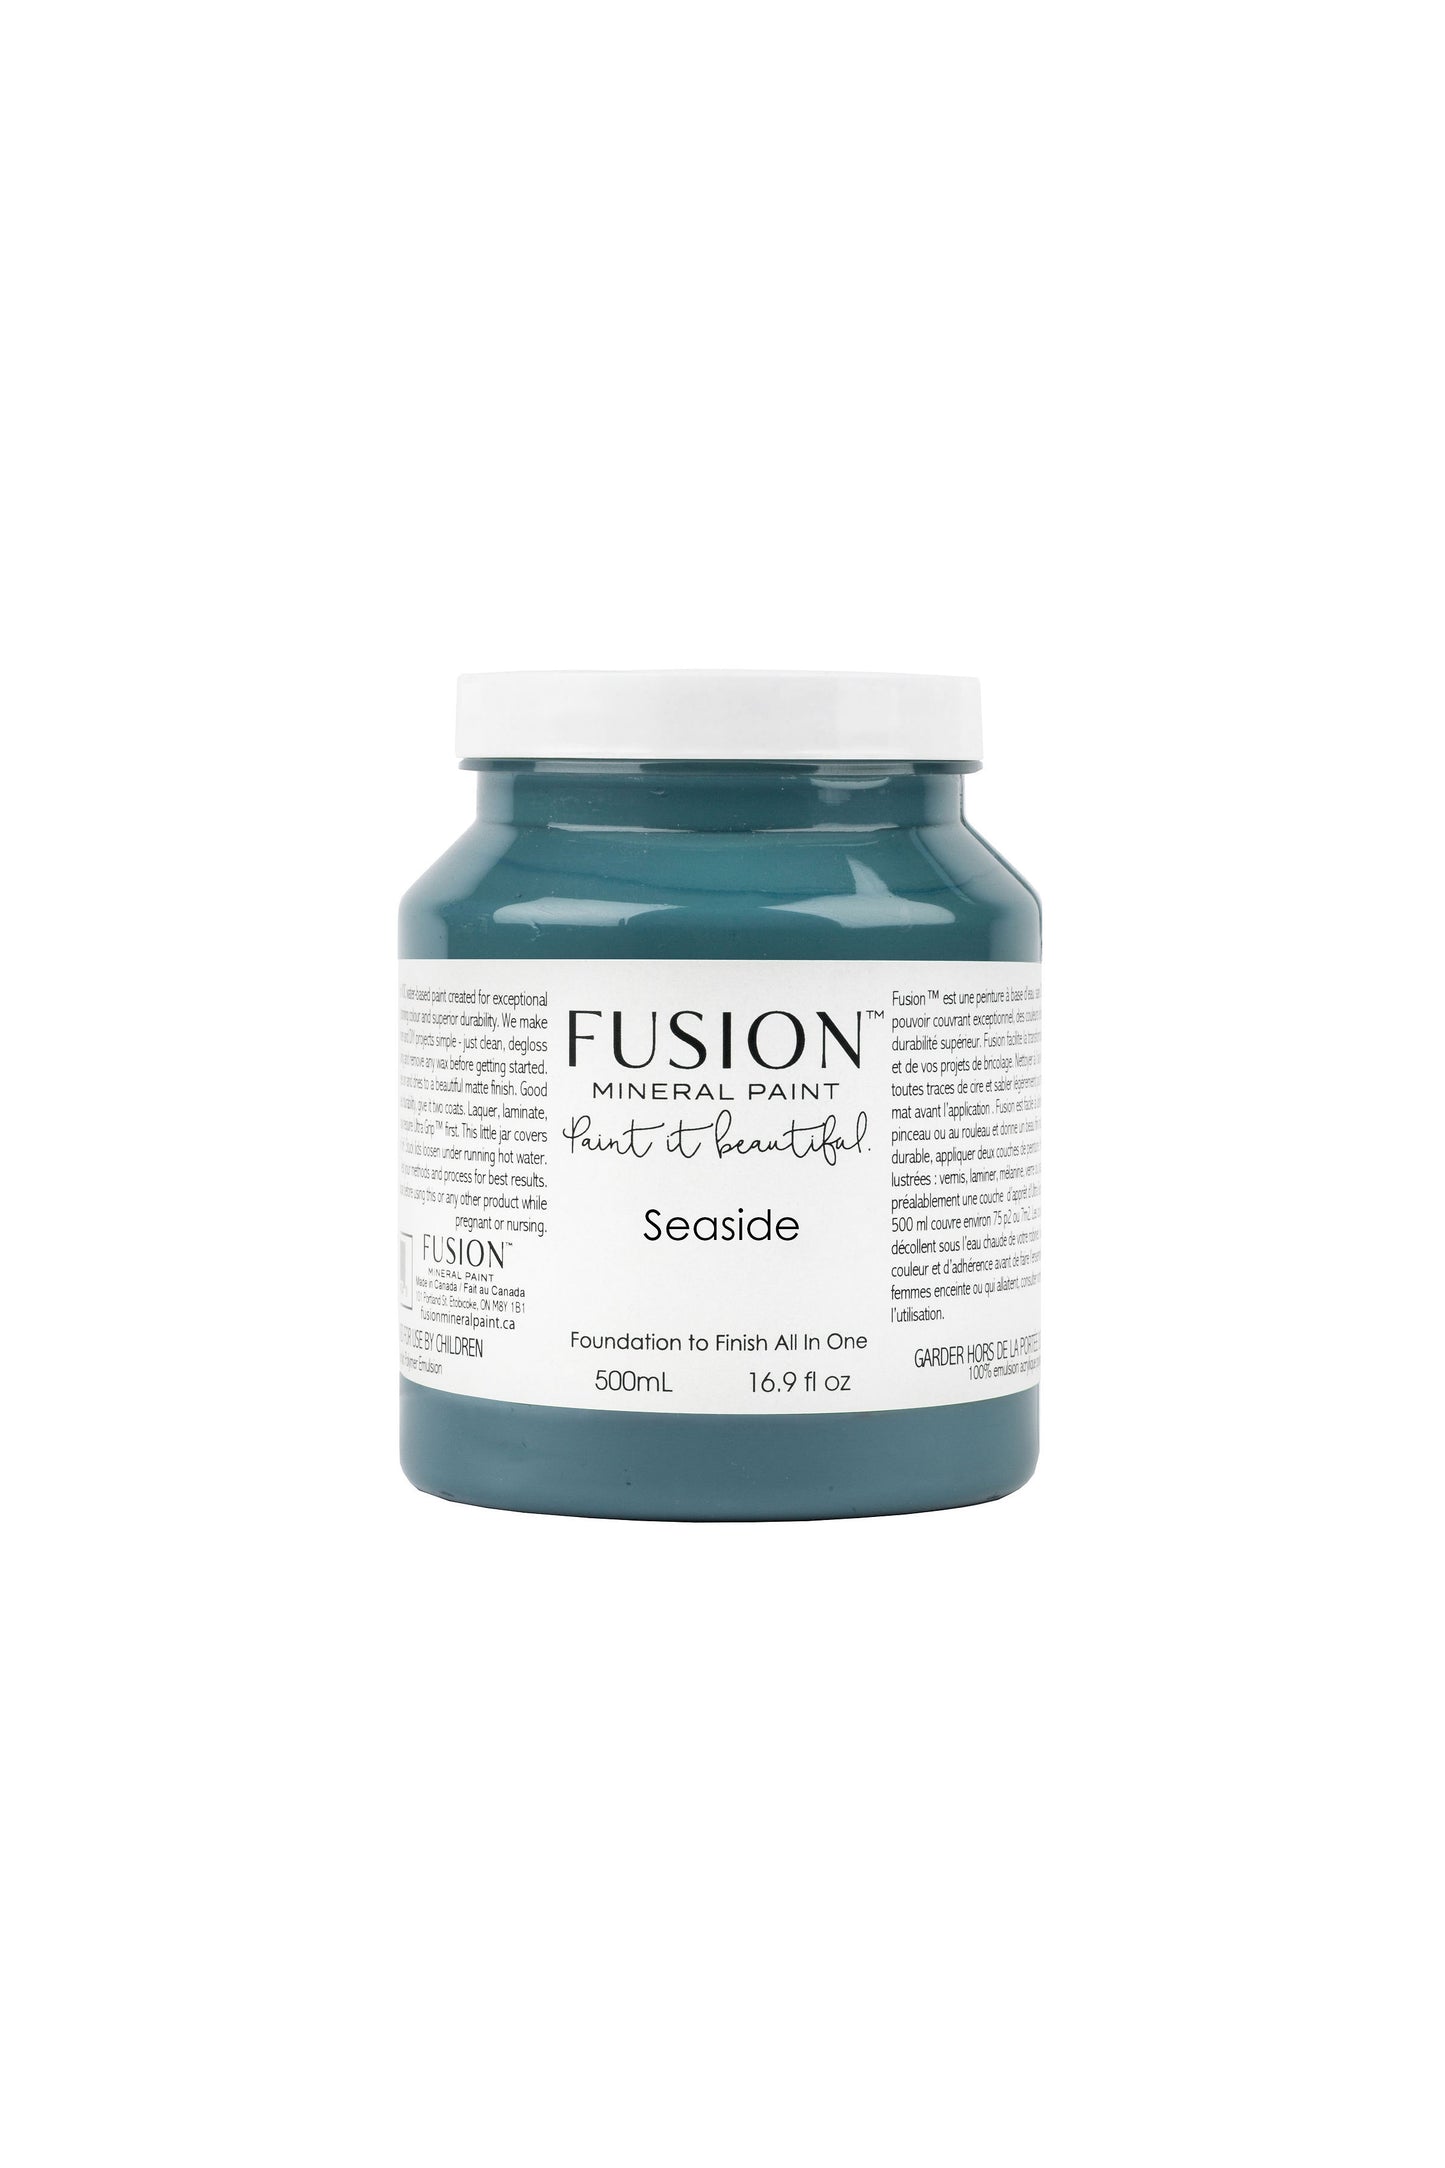 Seaside Fusion Mineral Paint, Costal Blue Paint Color| 500ml Pint Size